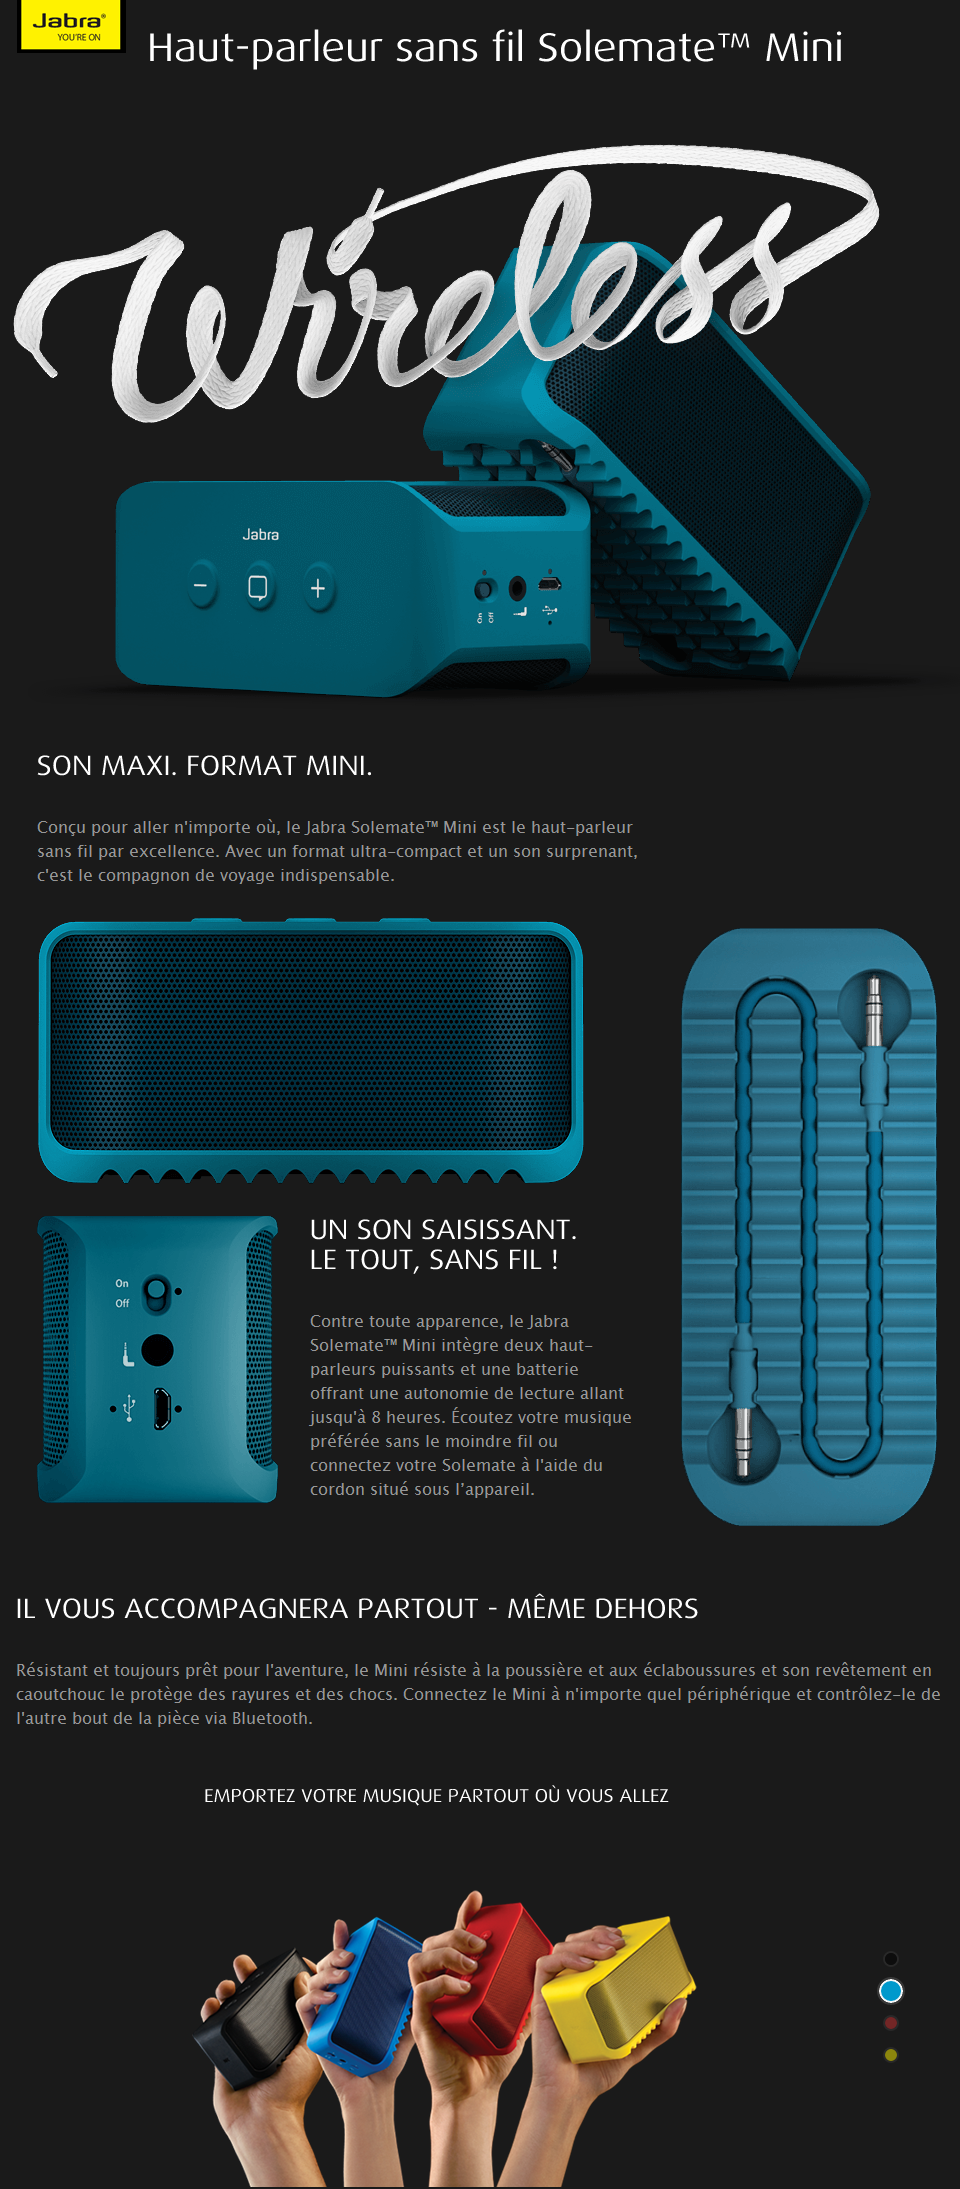 Acheter Haut-parleur Jabra sans fil Solemate™ Mini Maroc